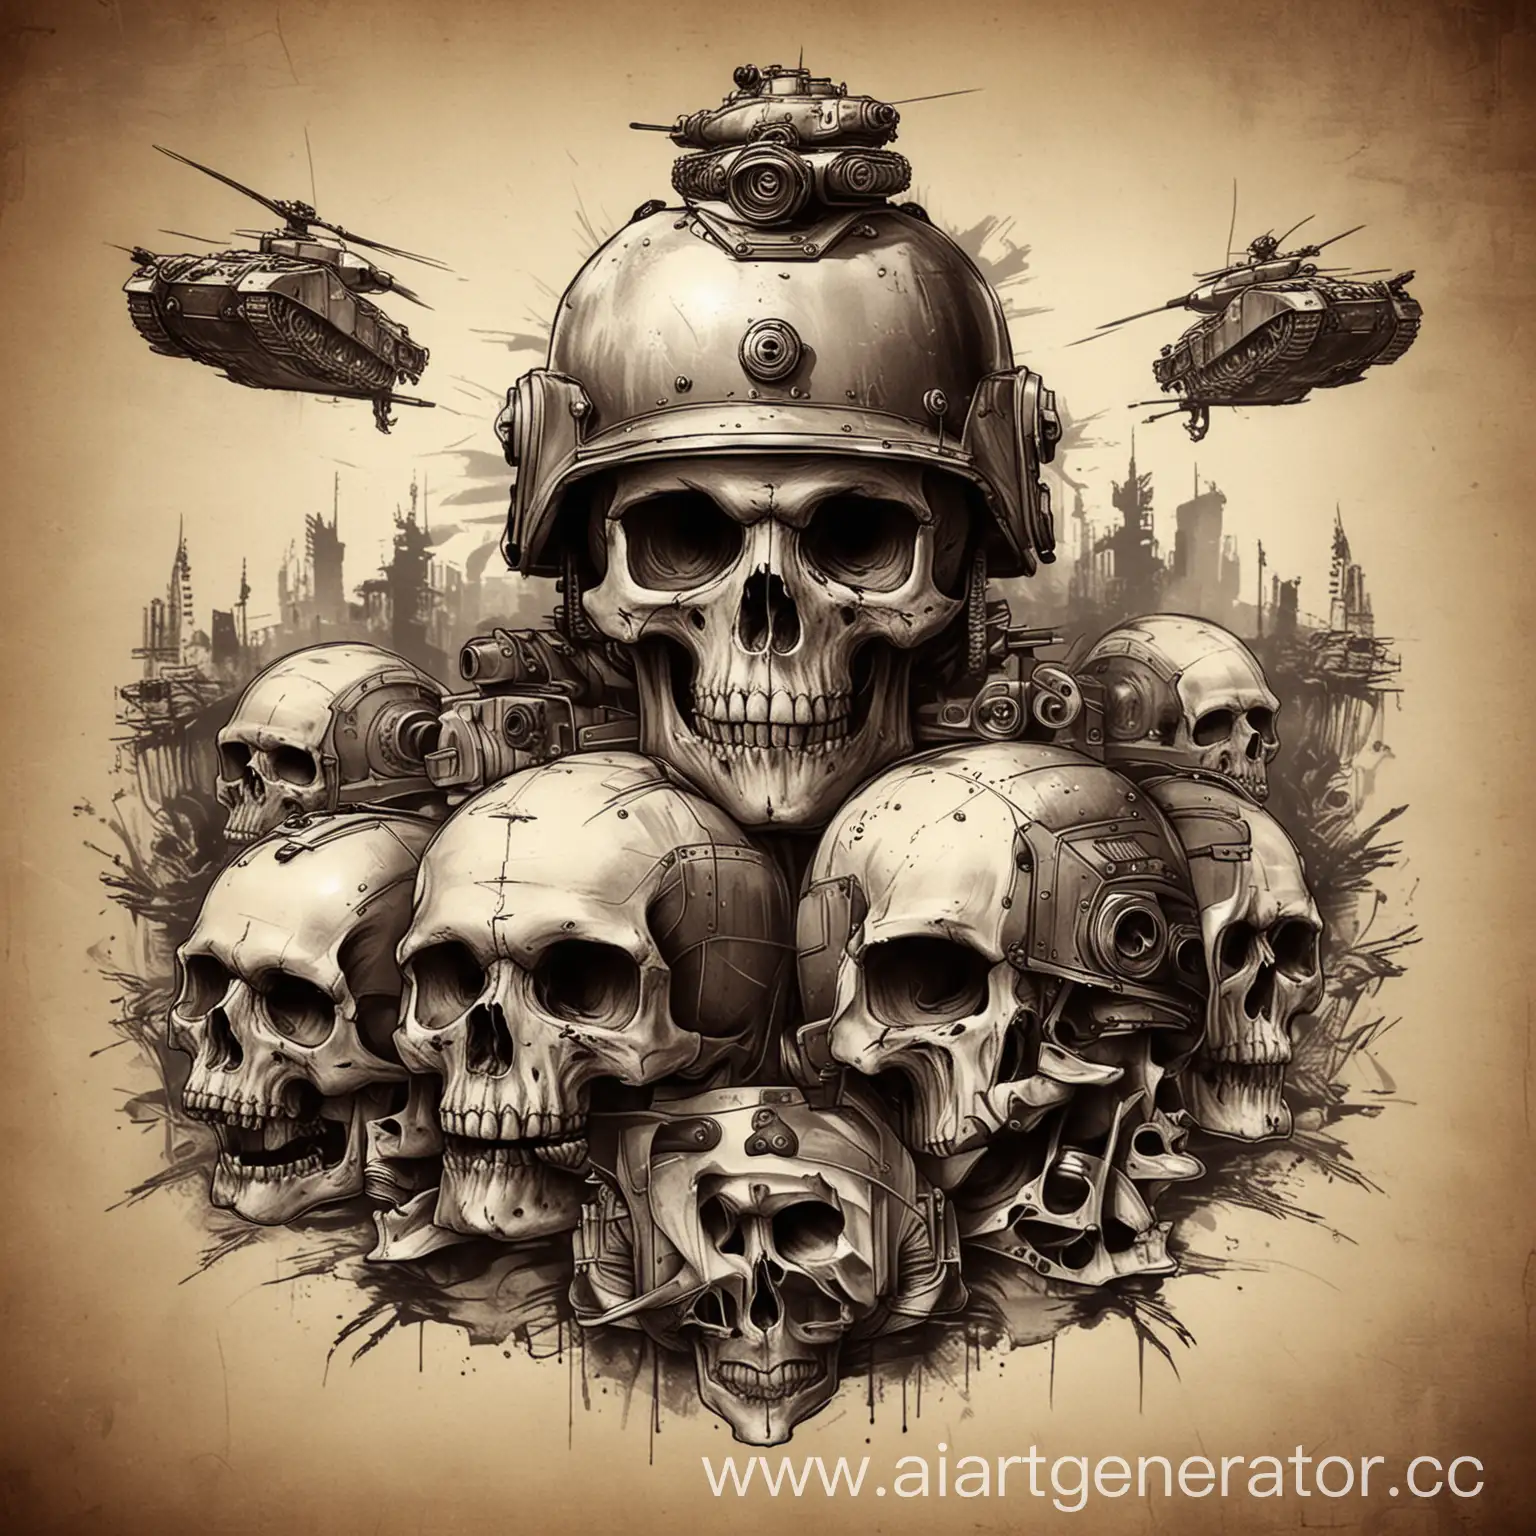 Skull-in-Helmets-with-Tank-Sketch-Tattoo-Design